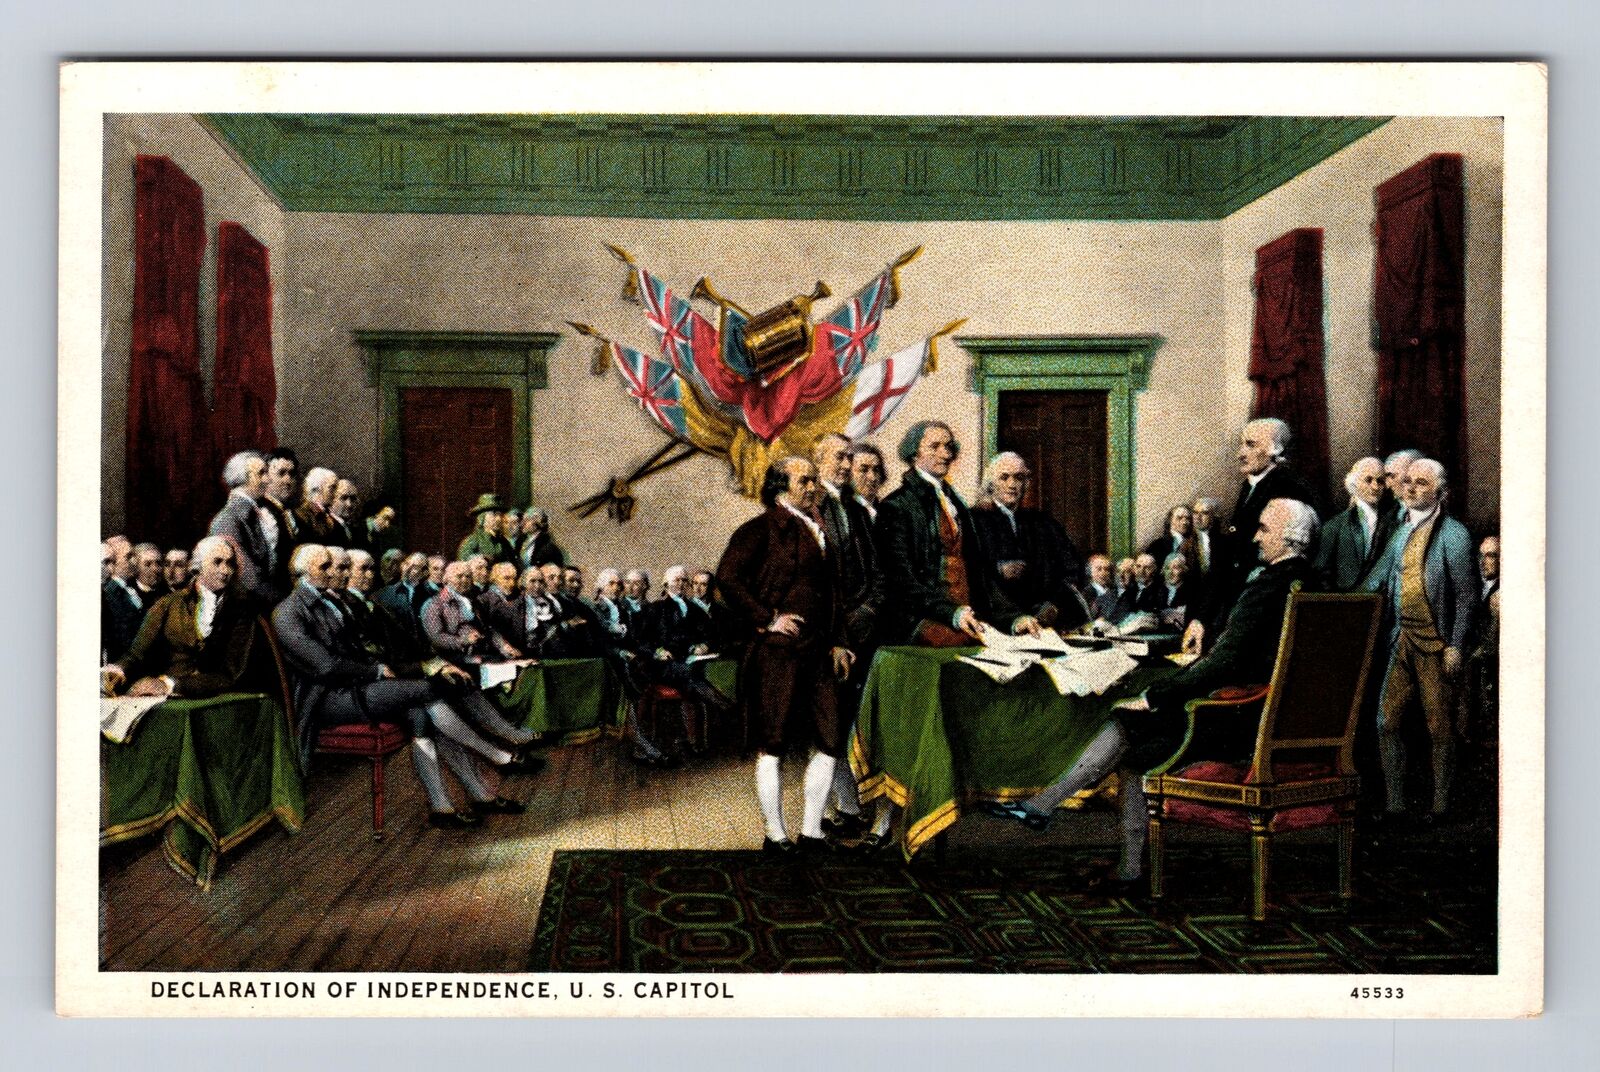 Washington DC, Declaration of Independence Painting at Capitol Vintage Postcard